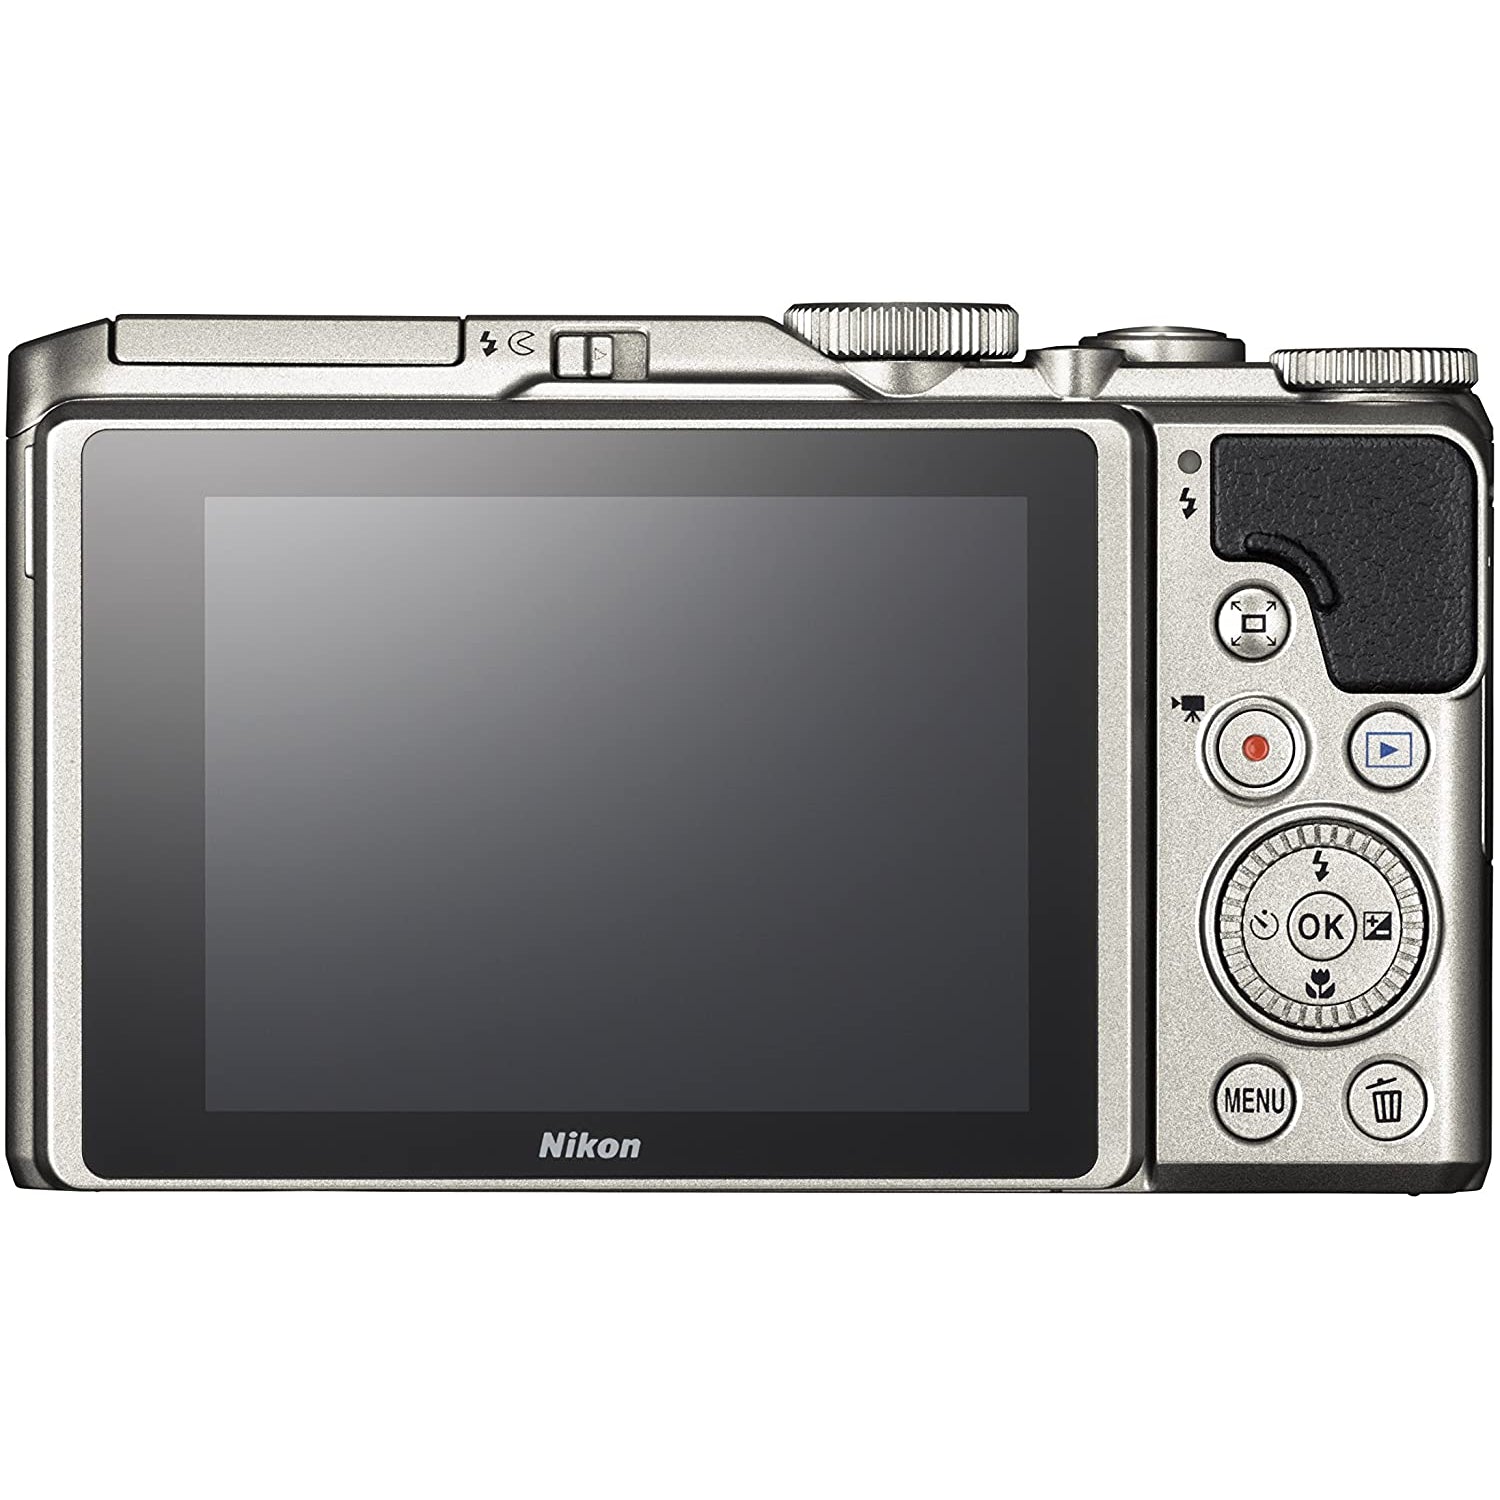 Nikon Coolpix A900 Compact System Camera - Silver